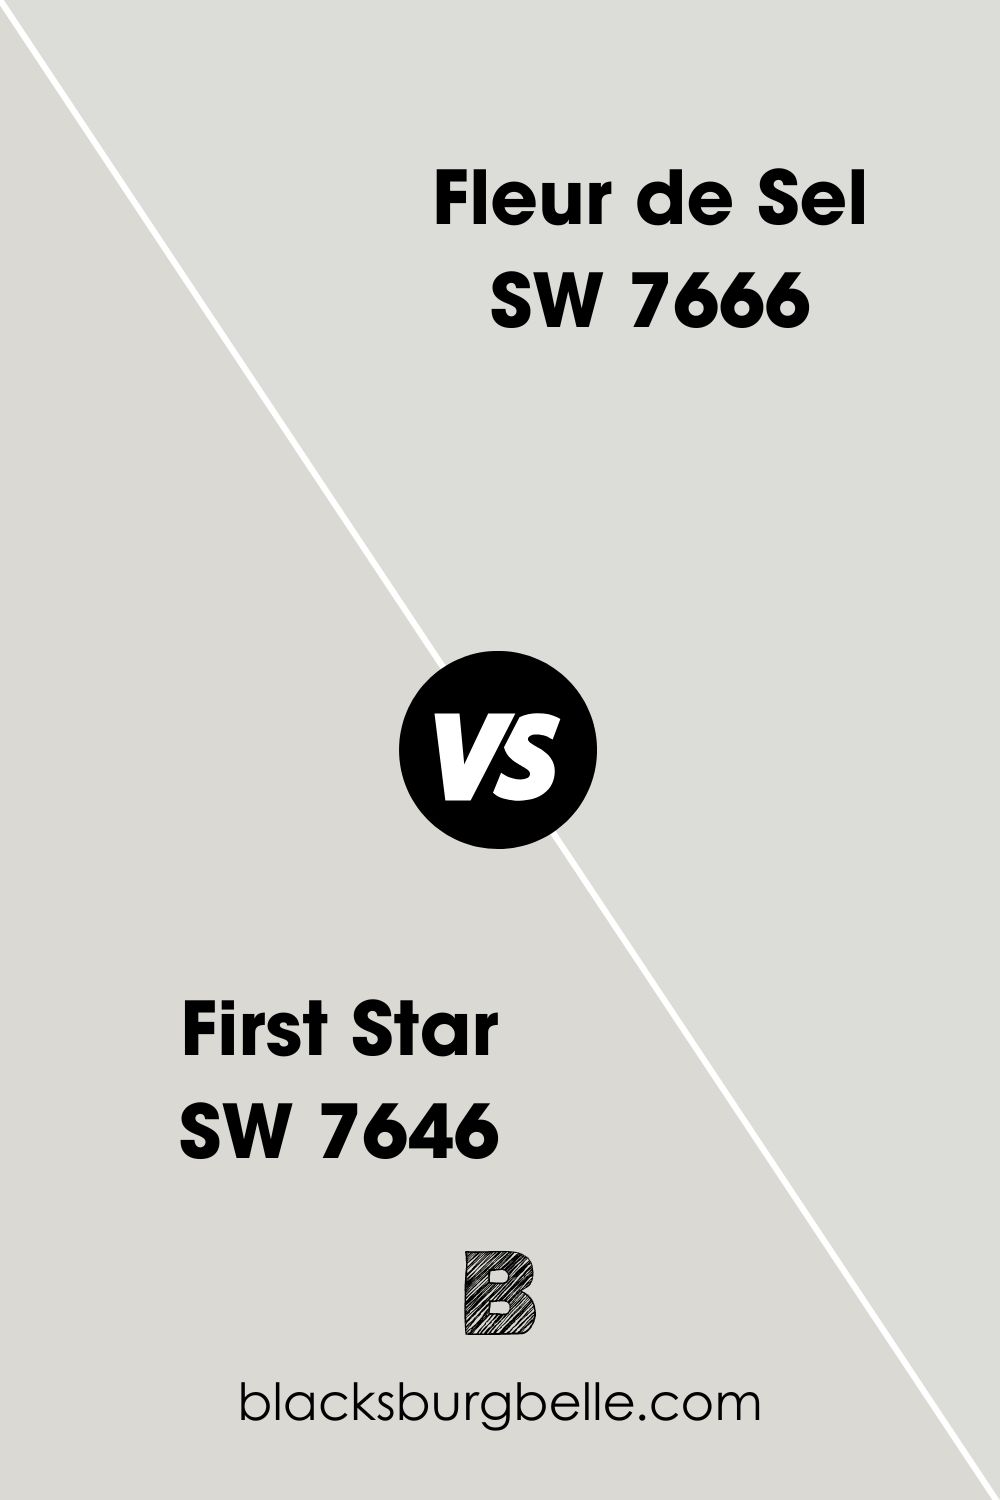 First Star SW 7646